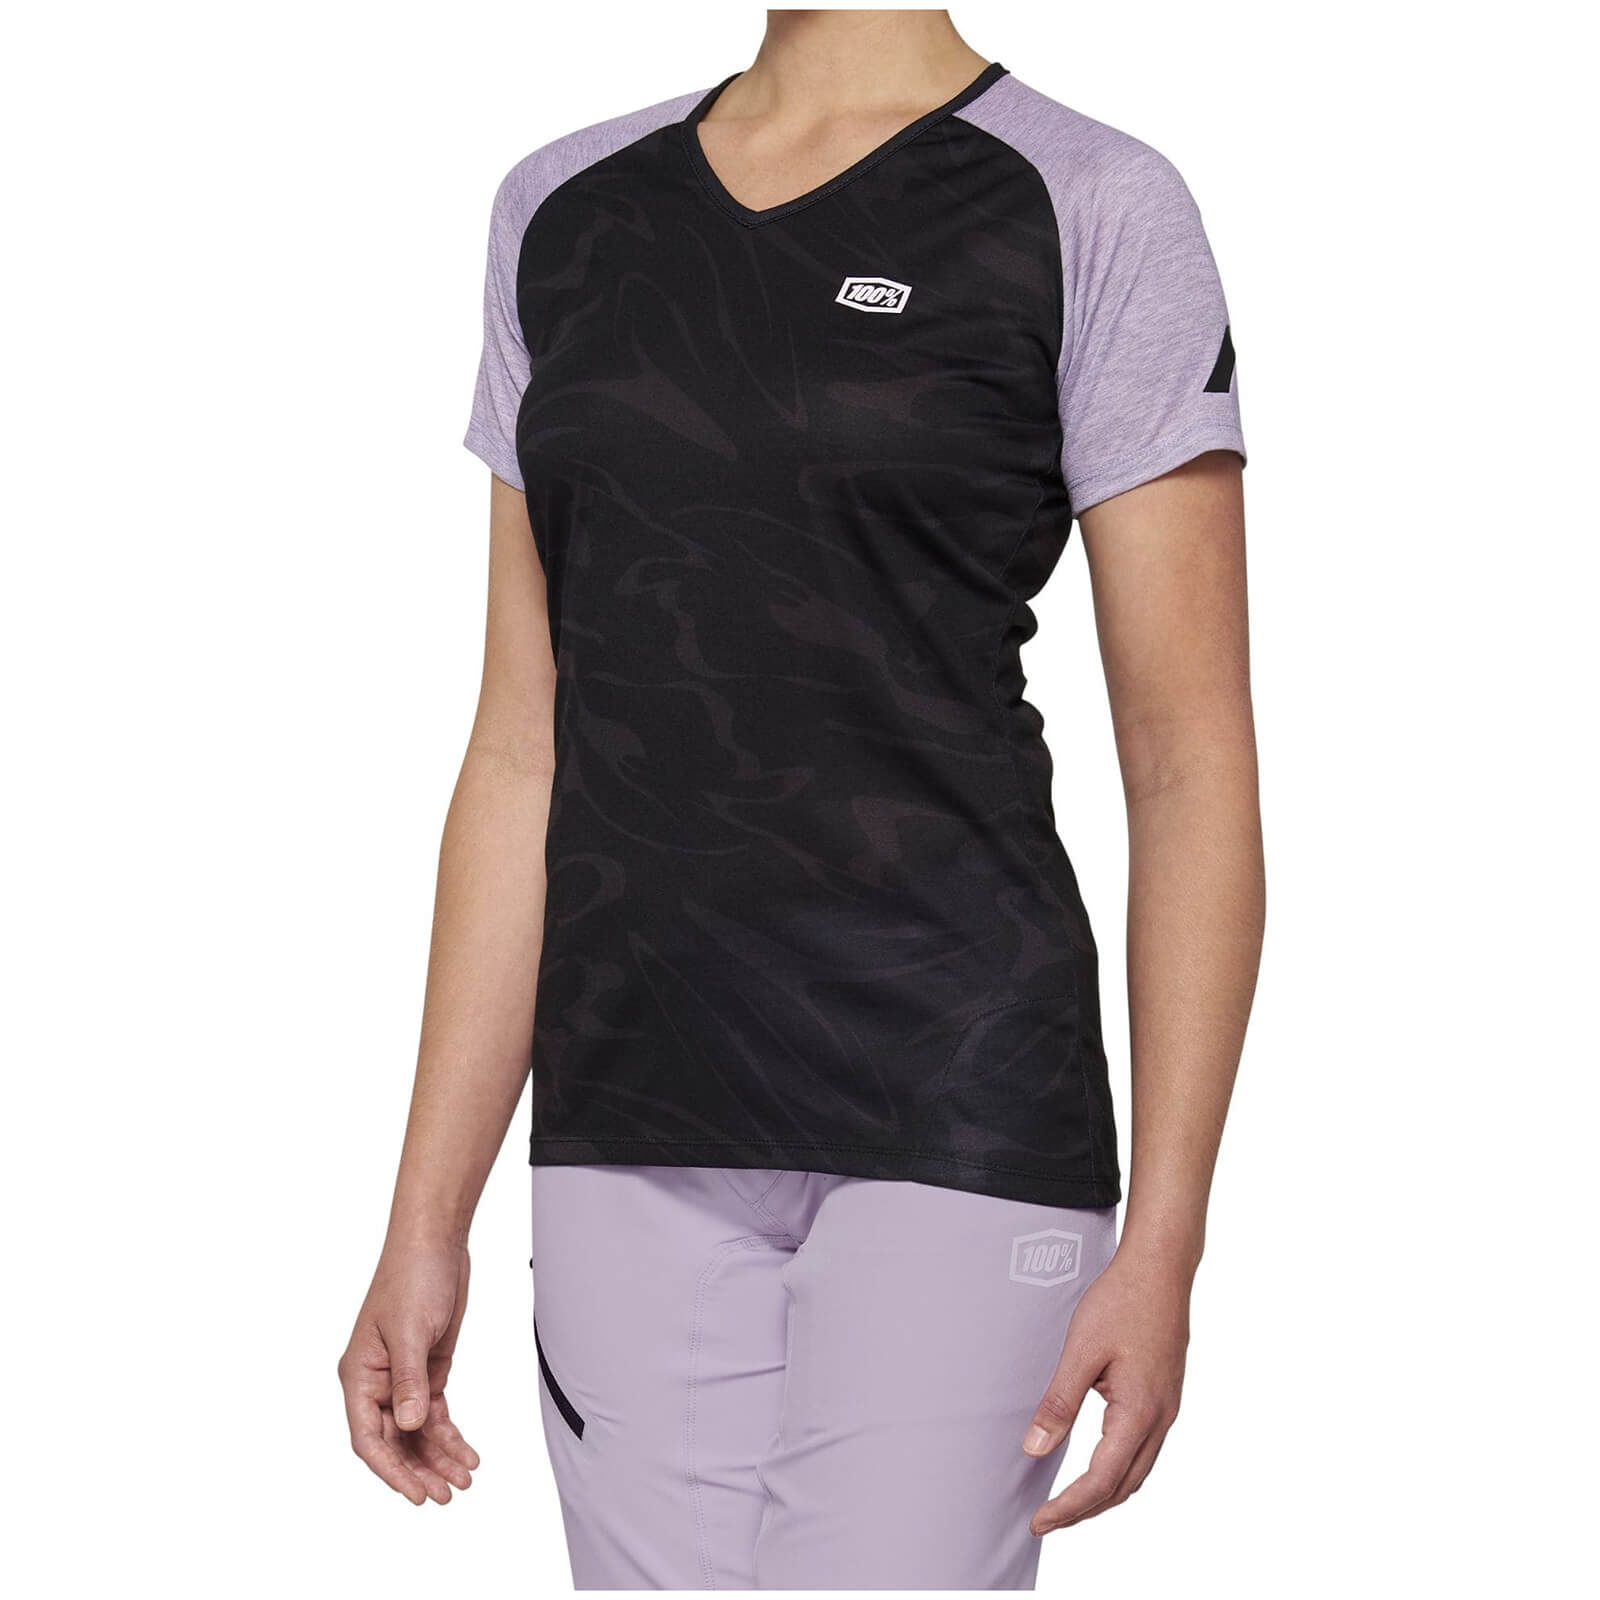 100% Women's Airmatic MTB Jersey - S - Black/Lavender